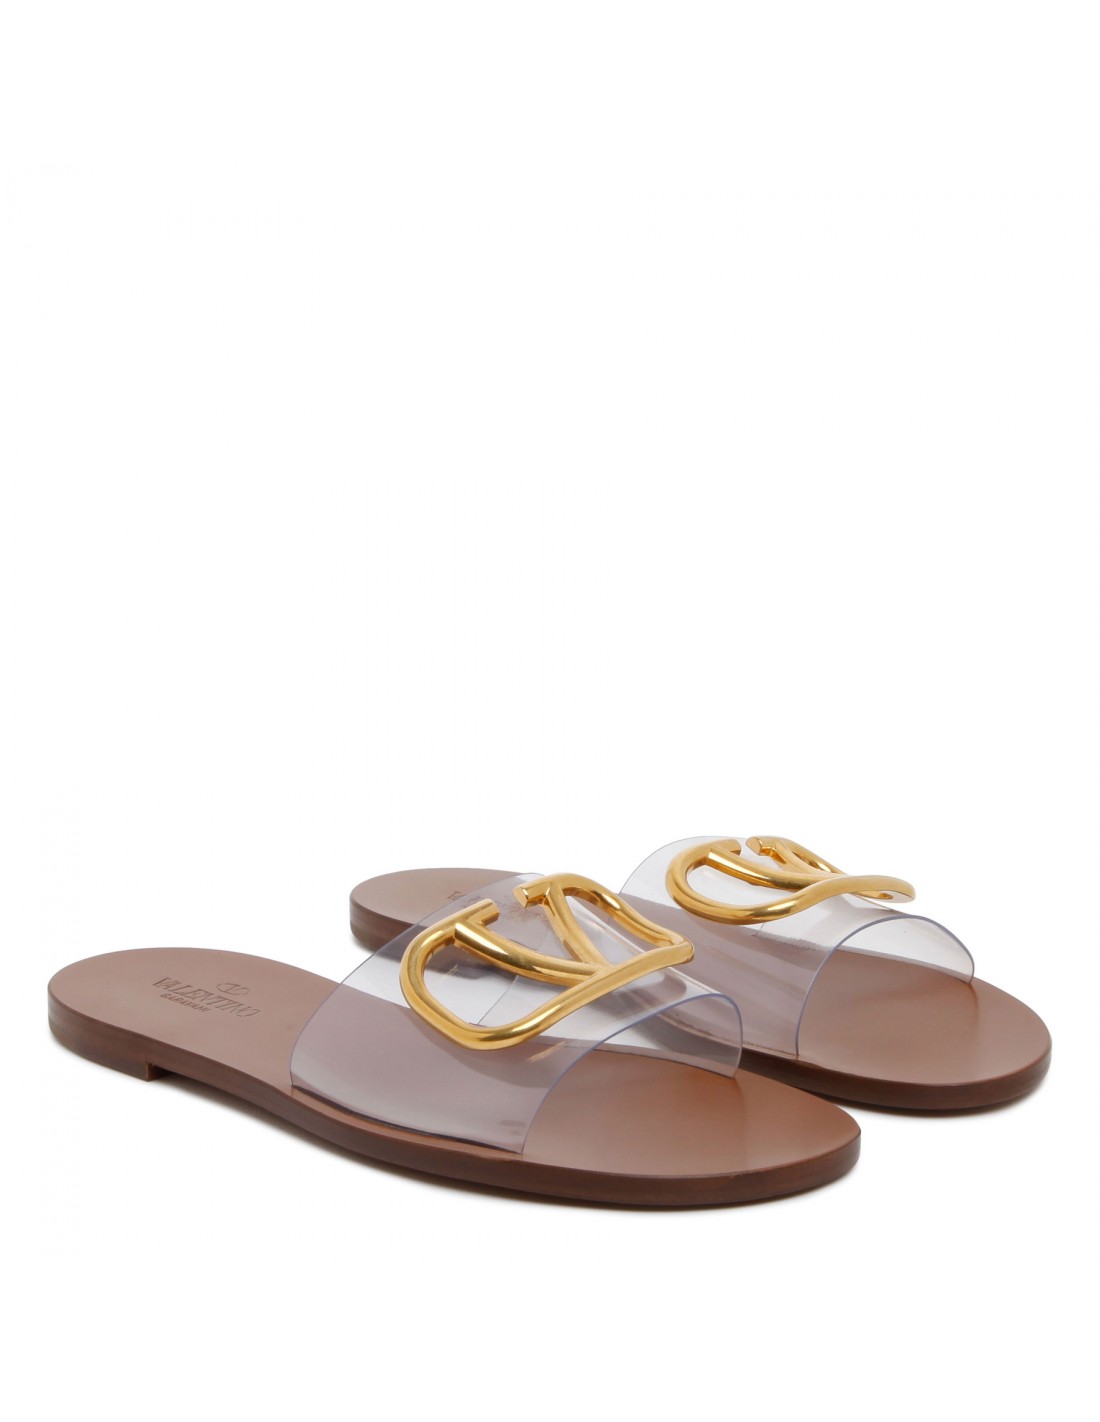 VLogo signature slide sandals